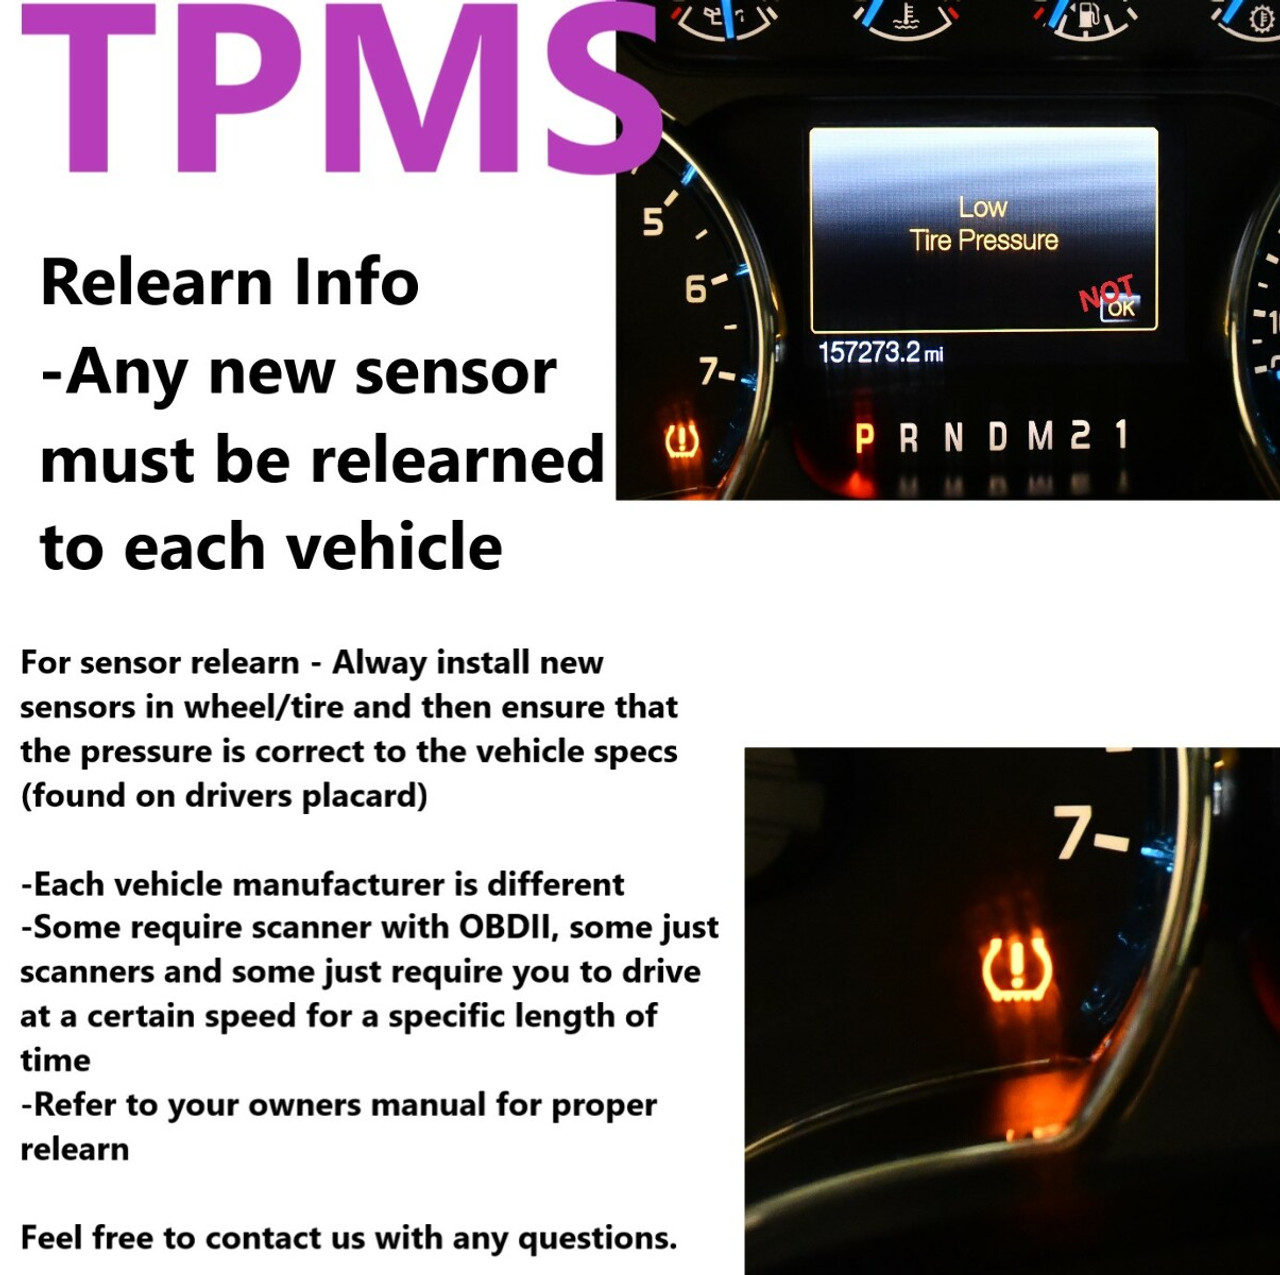 Single TPMS Tire Pressure Sensor 315Mhz Rubber fits 06-11 Mercedes CLS Class